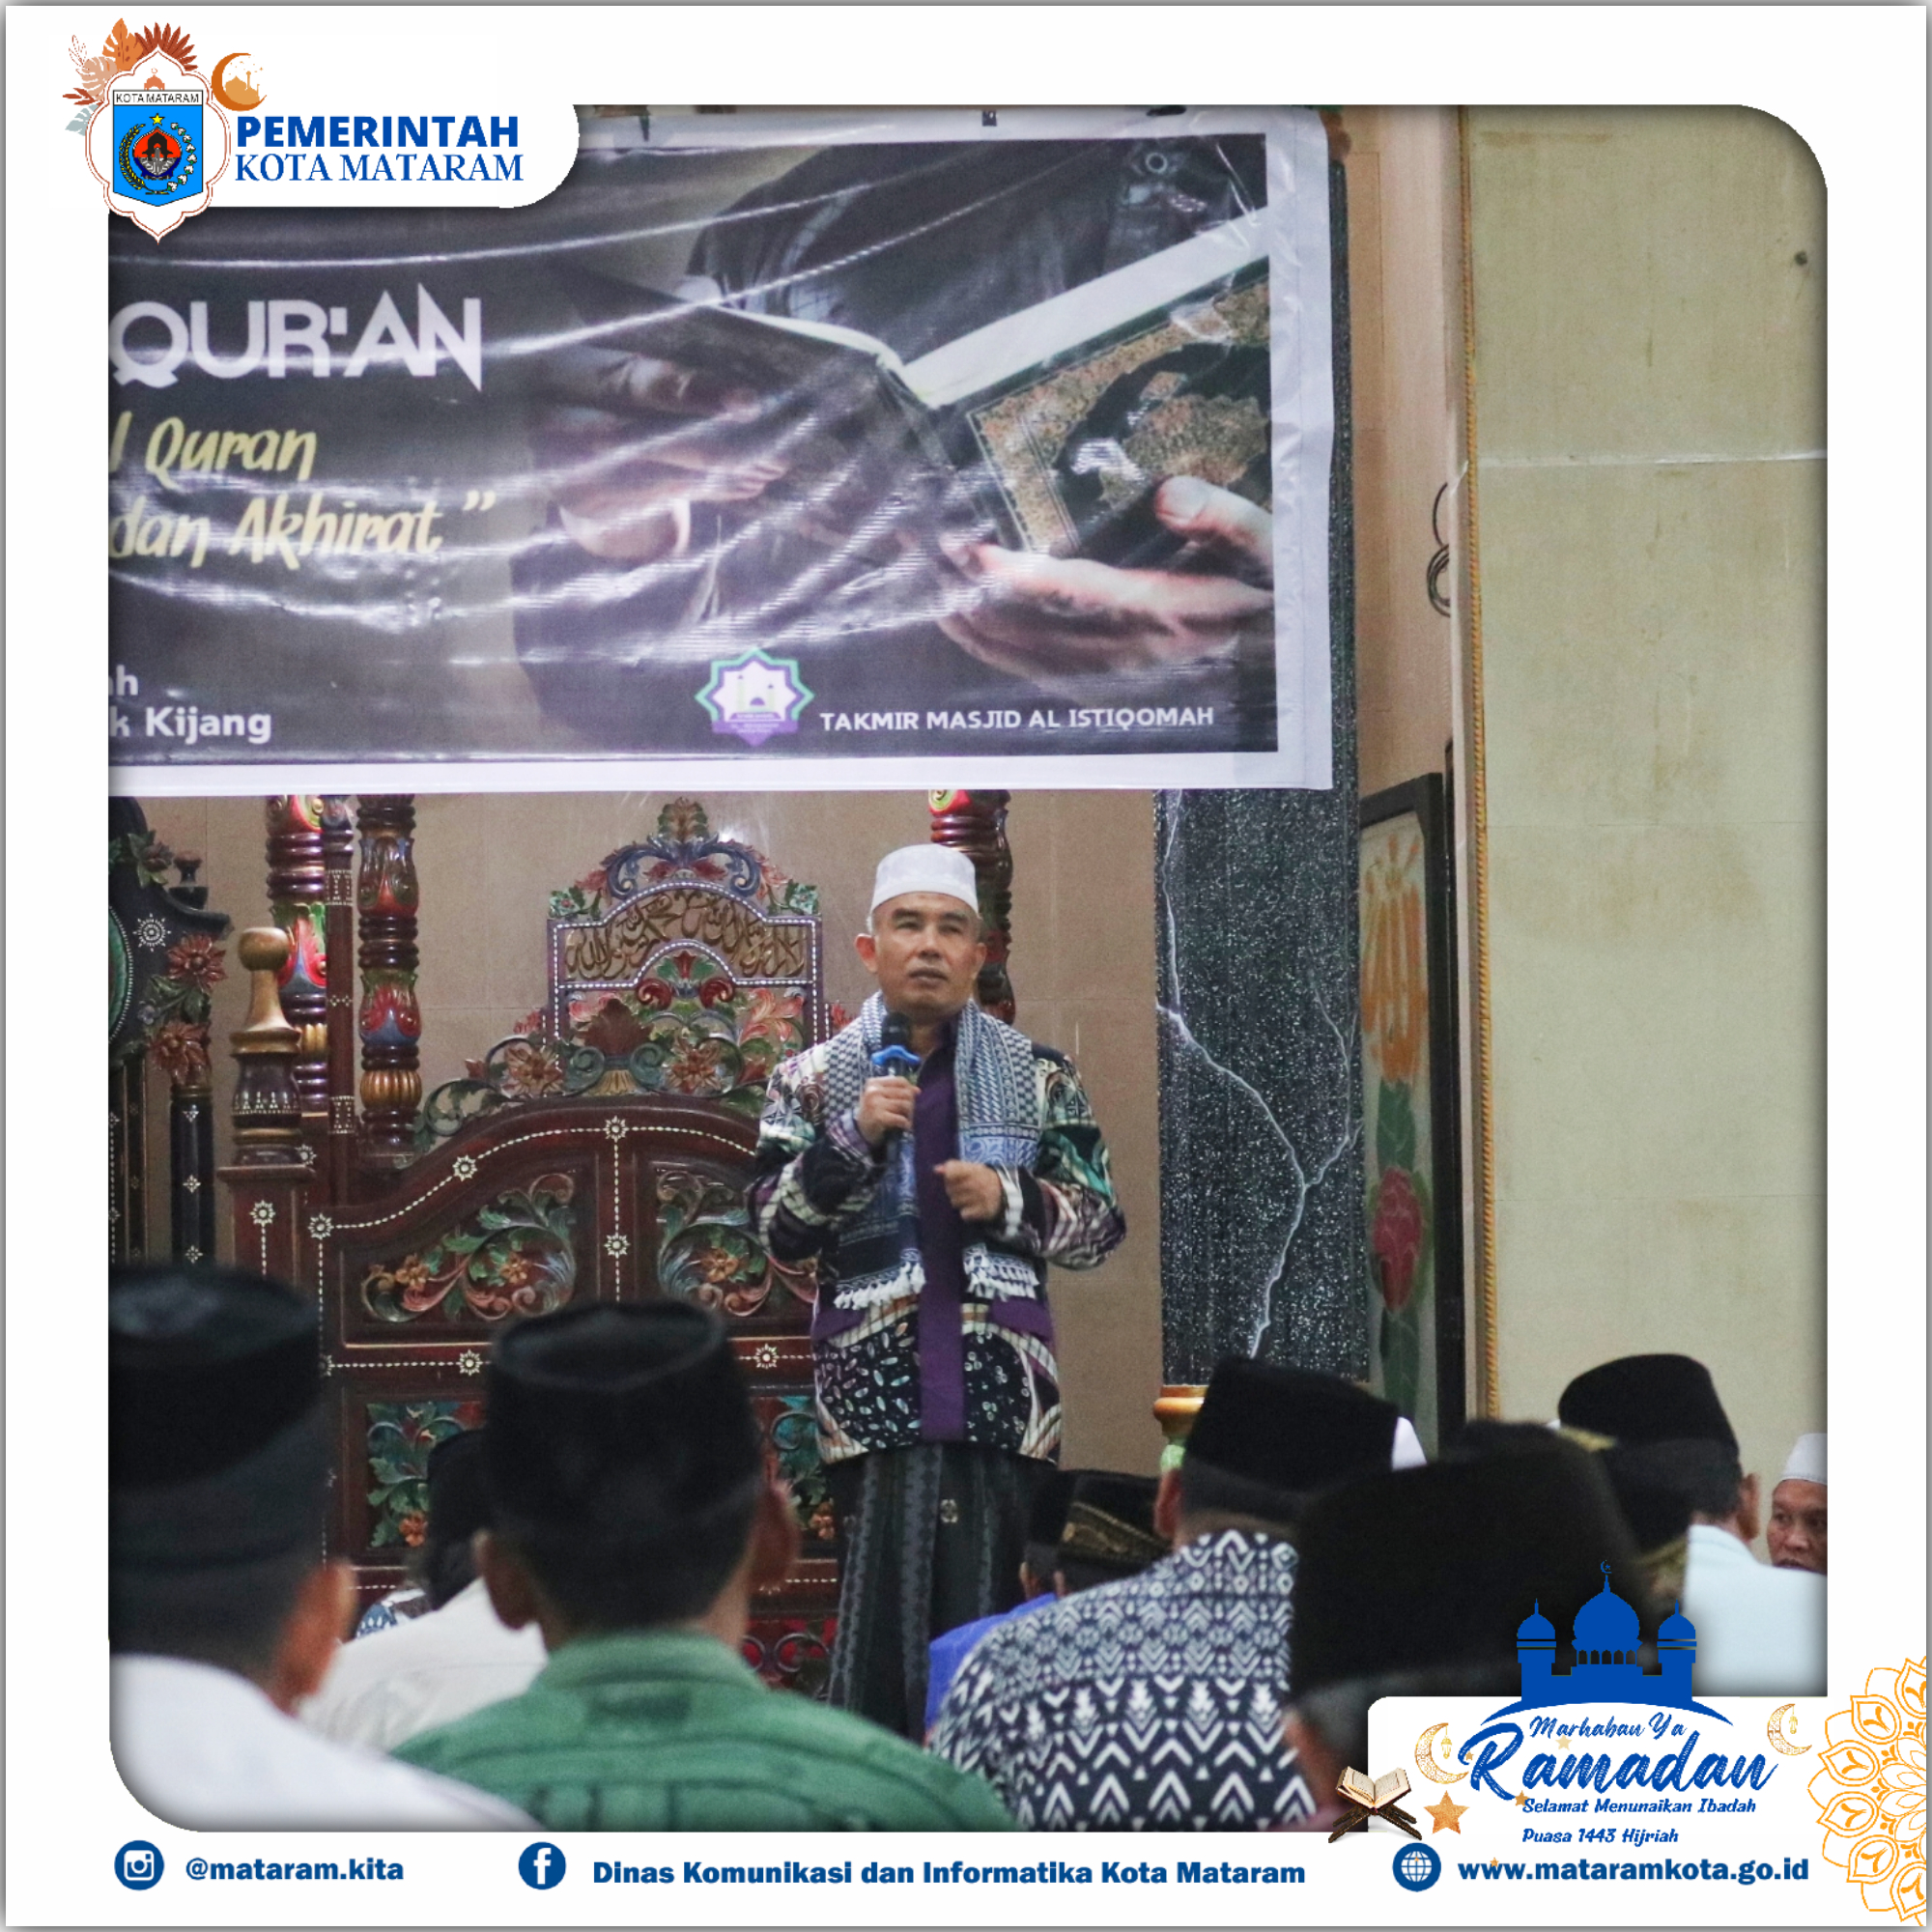 Nuzulul Quran Kekalik Kijang Kota Mataram